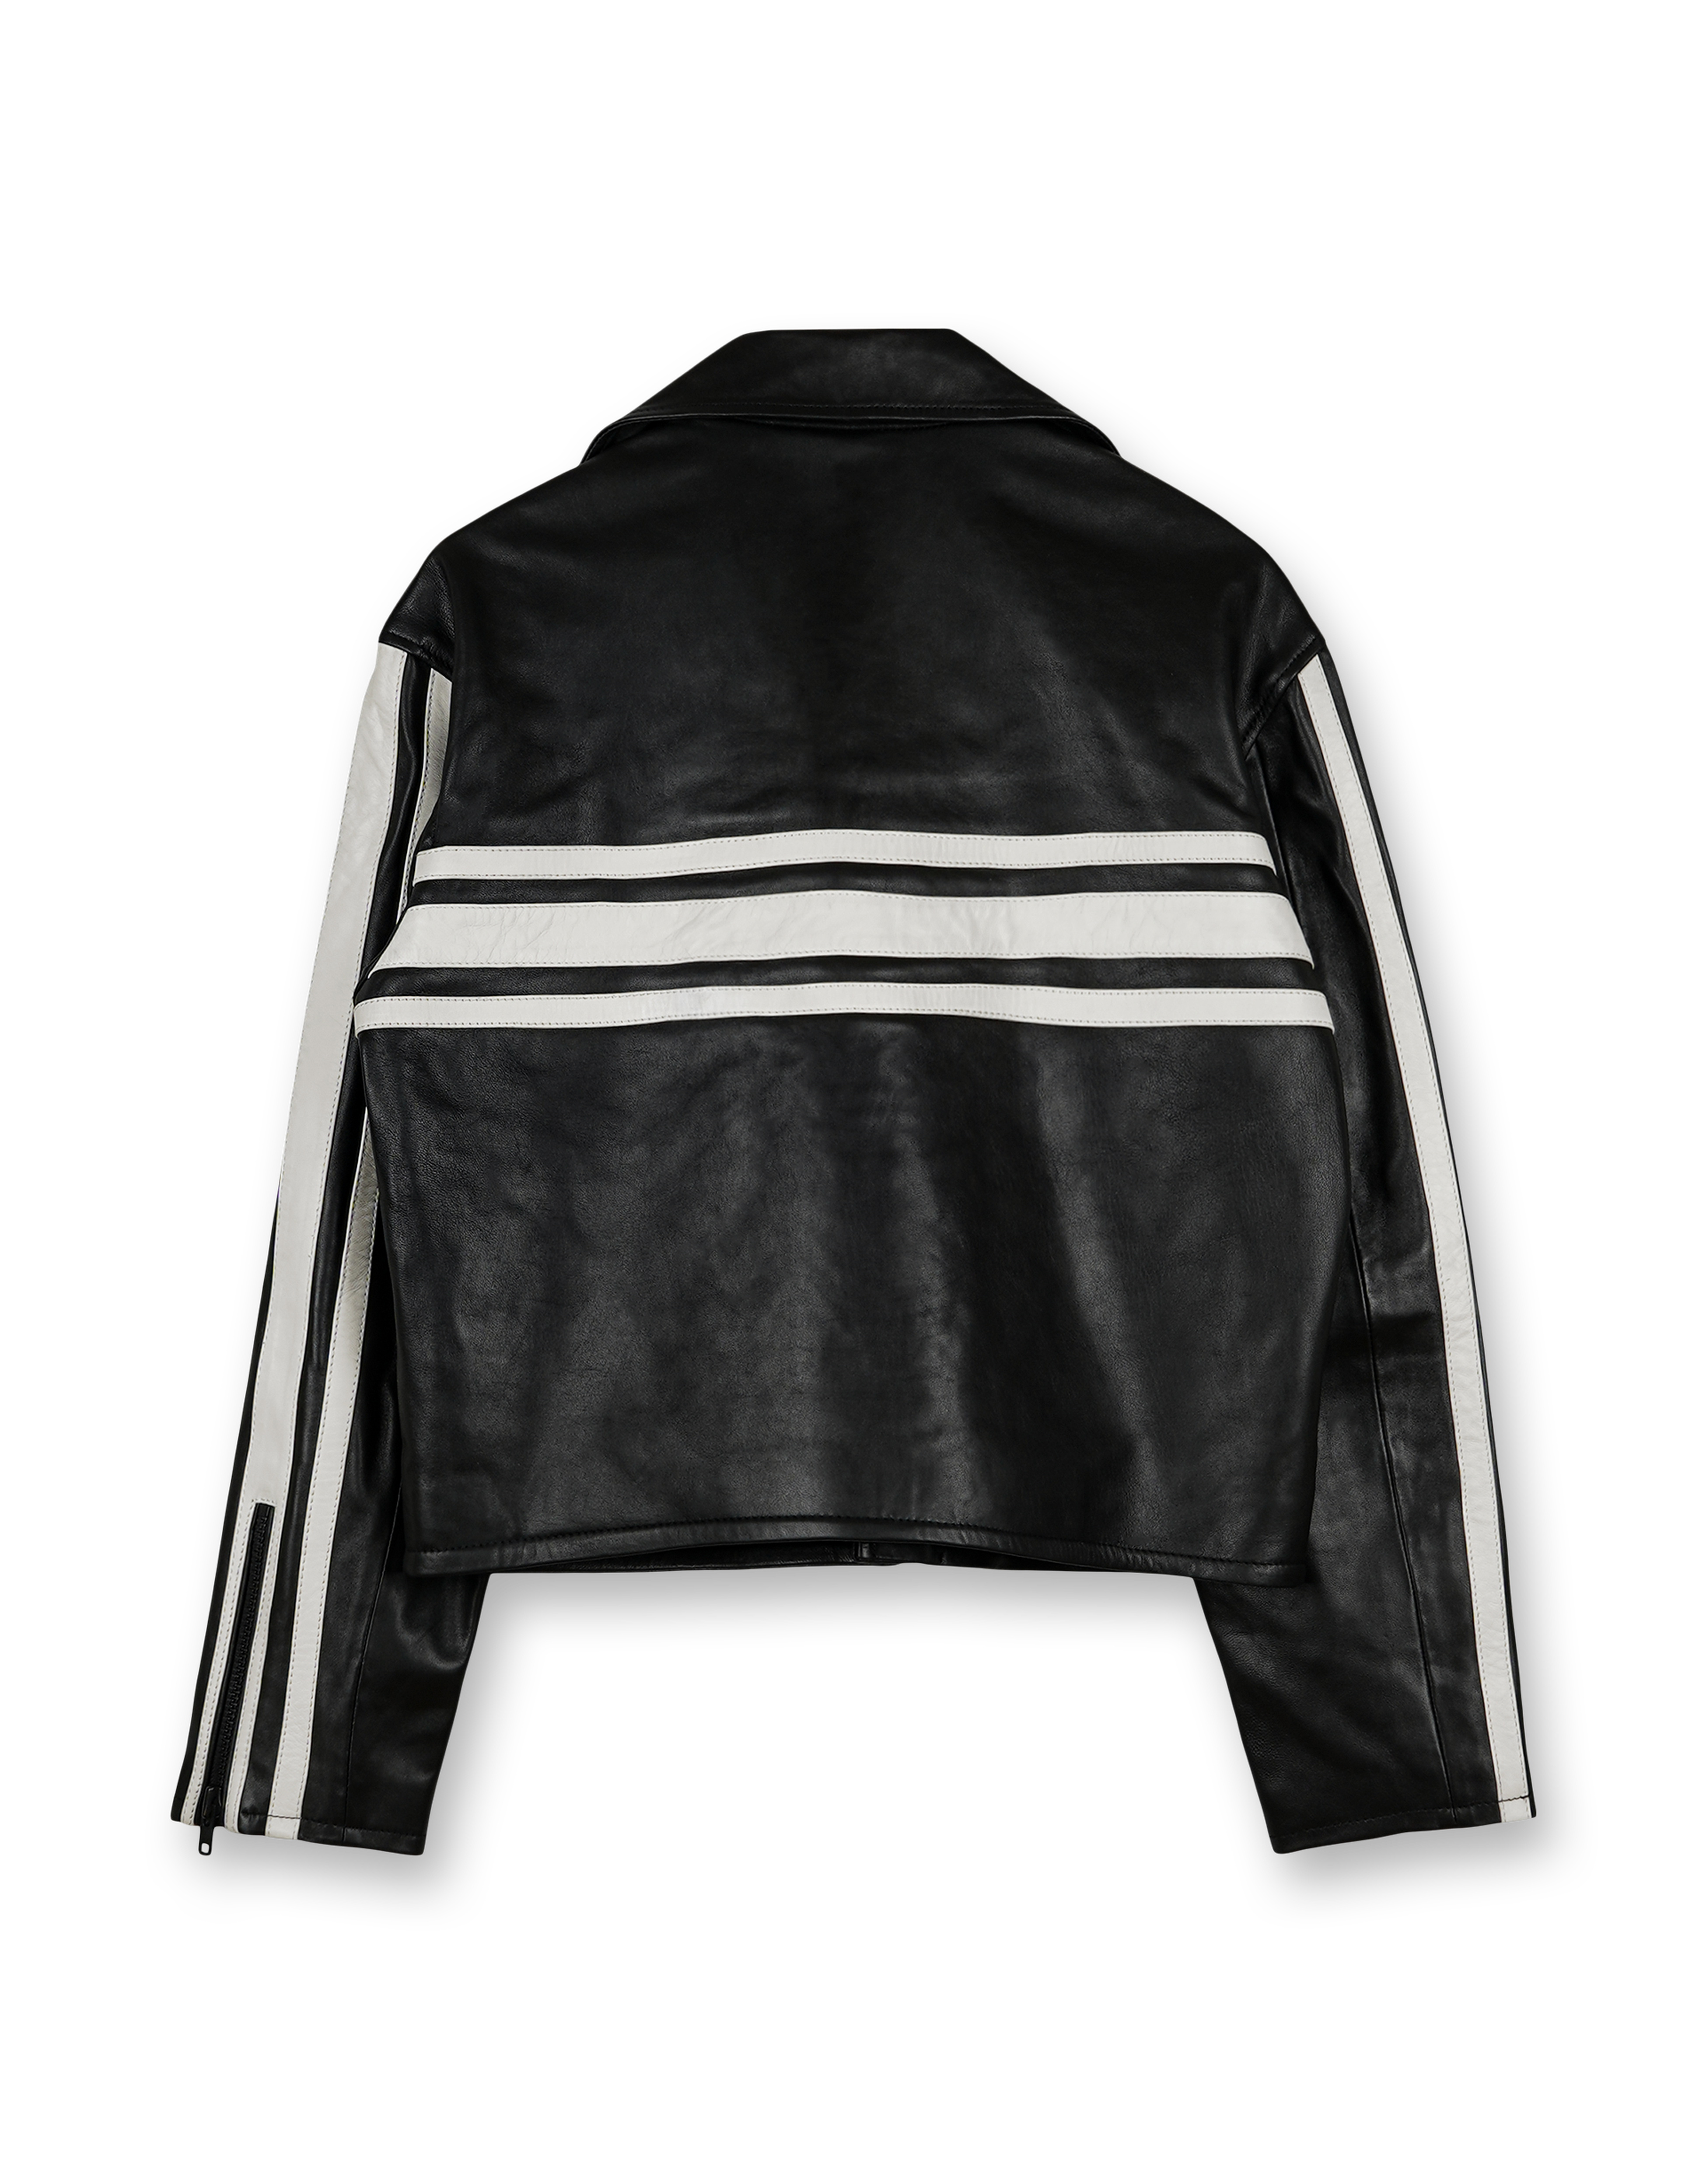 Race Leather Jacket